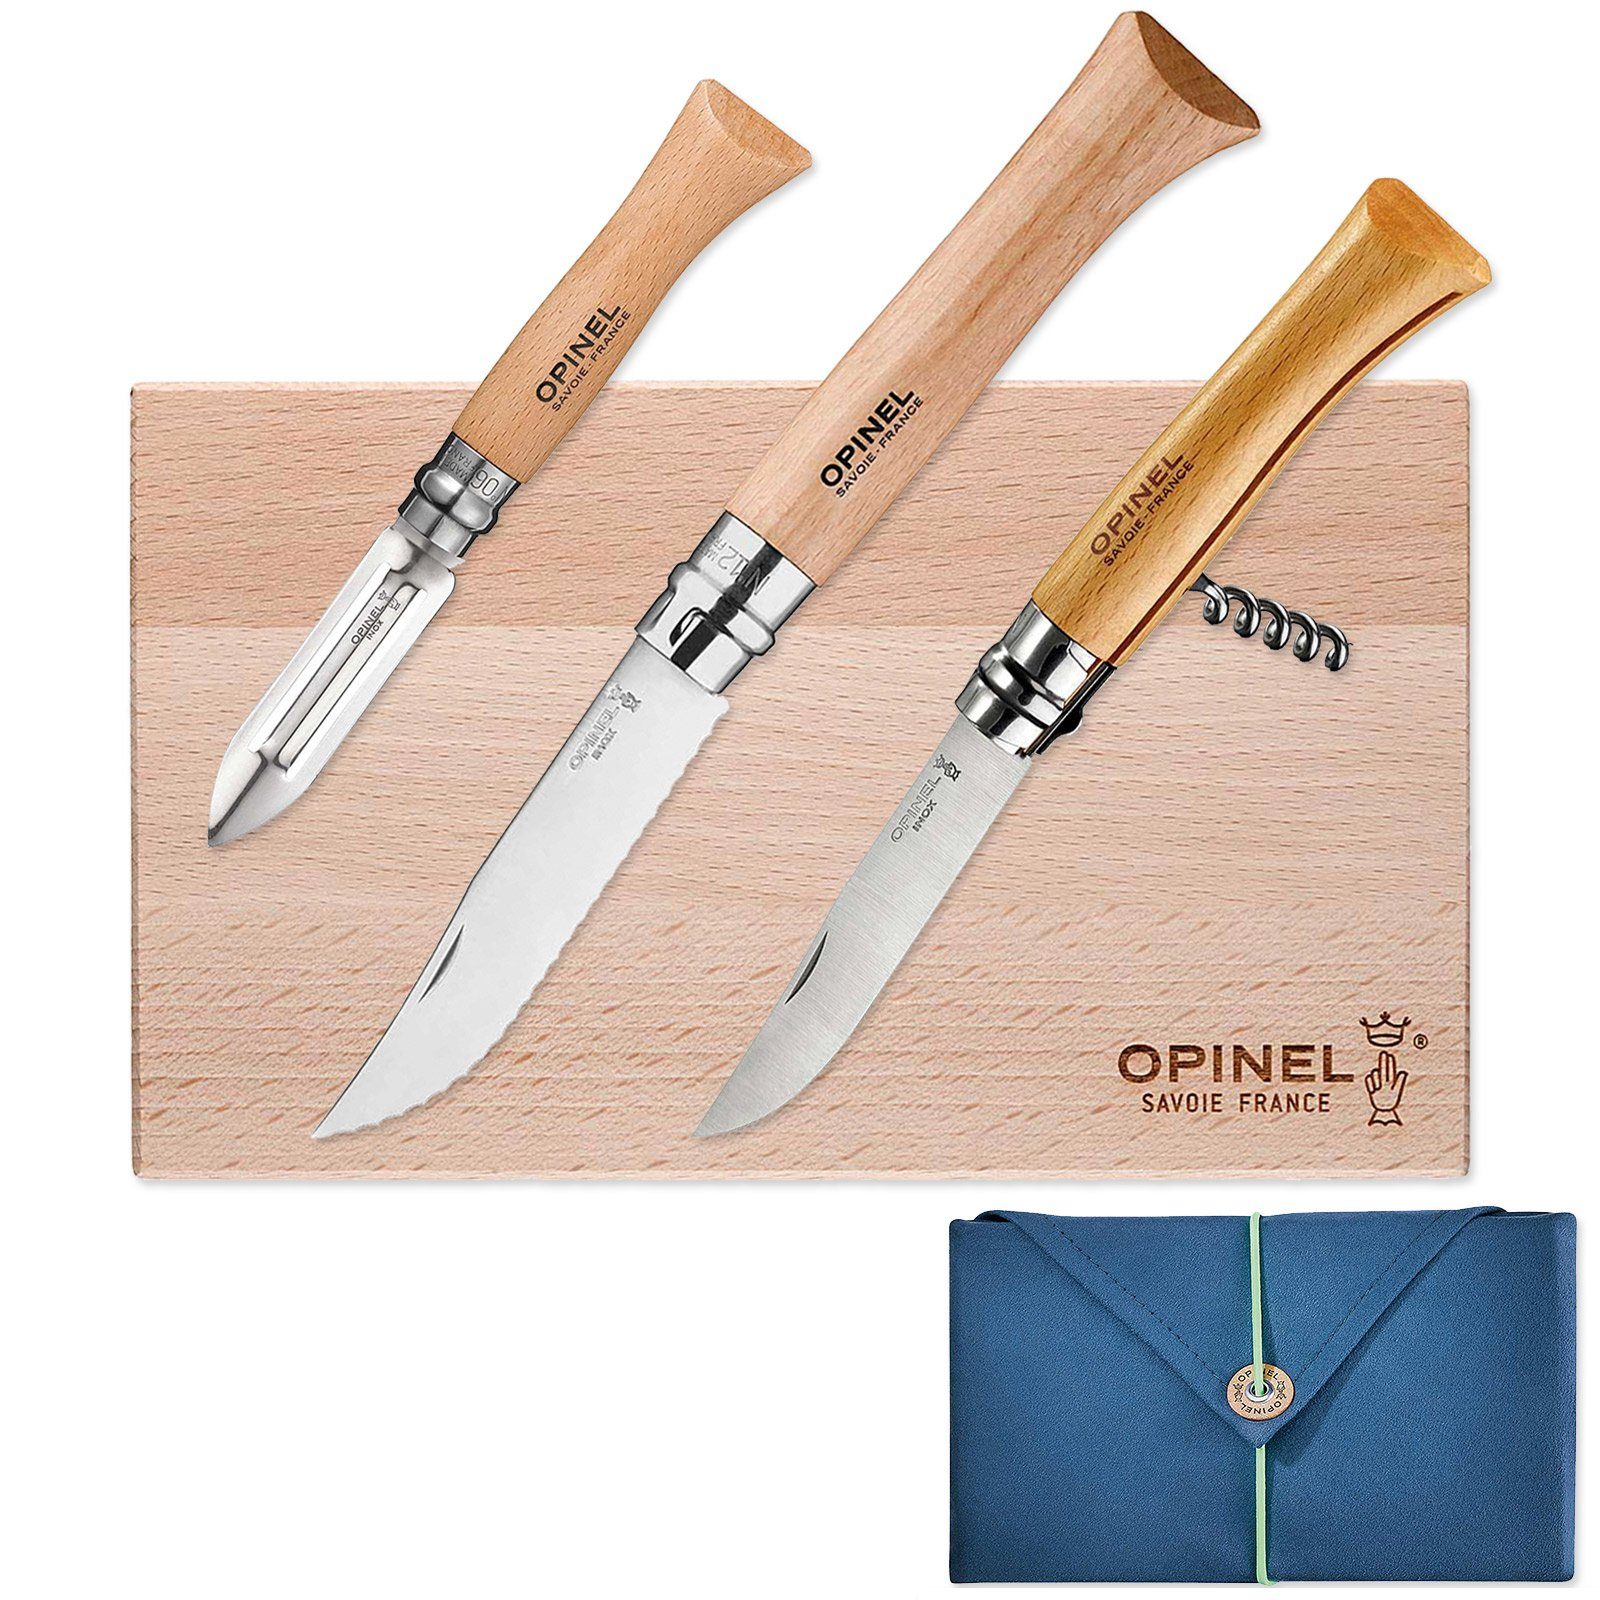 Küche Taschenmesser Messer Taschen Stahl Koch Camping, Outdoor Set Brett Opinel Picknick Holz